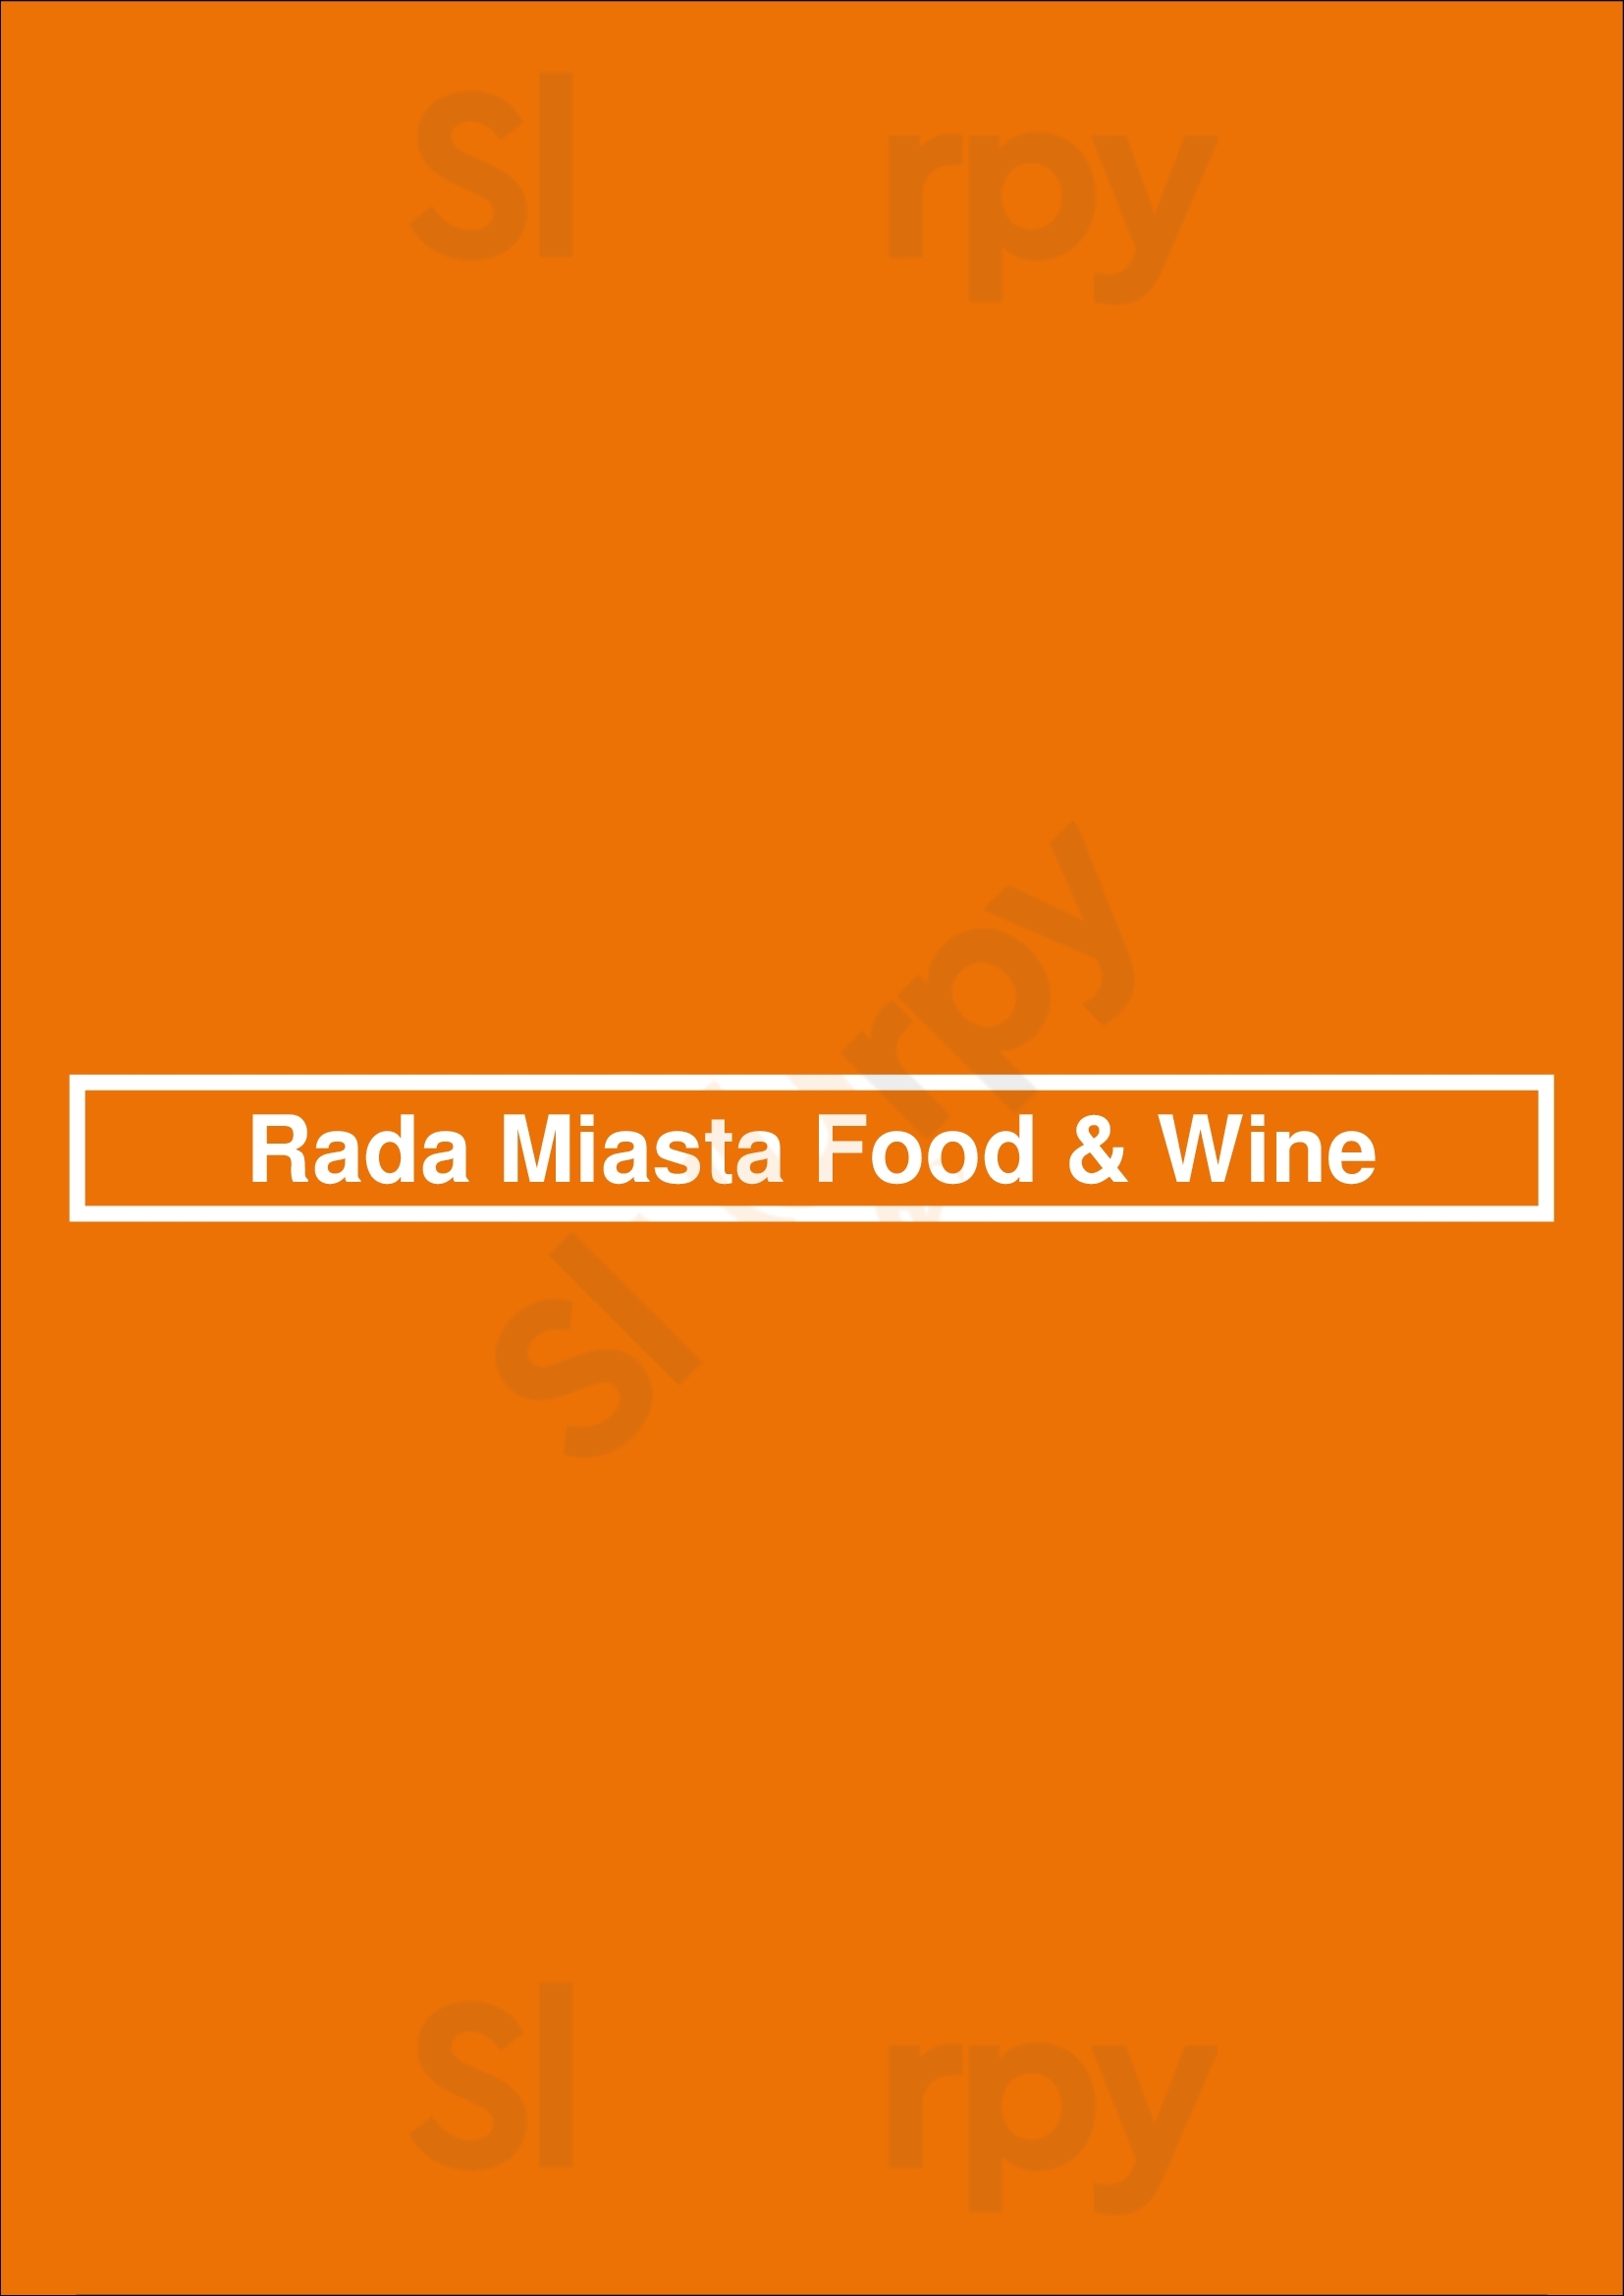 Rada Miasta Food & Wine Gdańsk Menu - 1